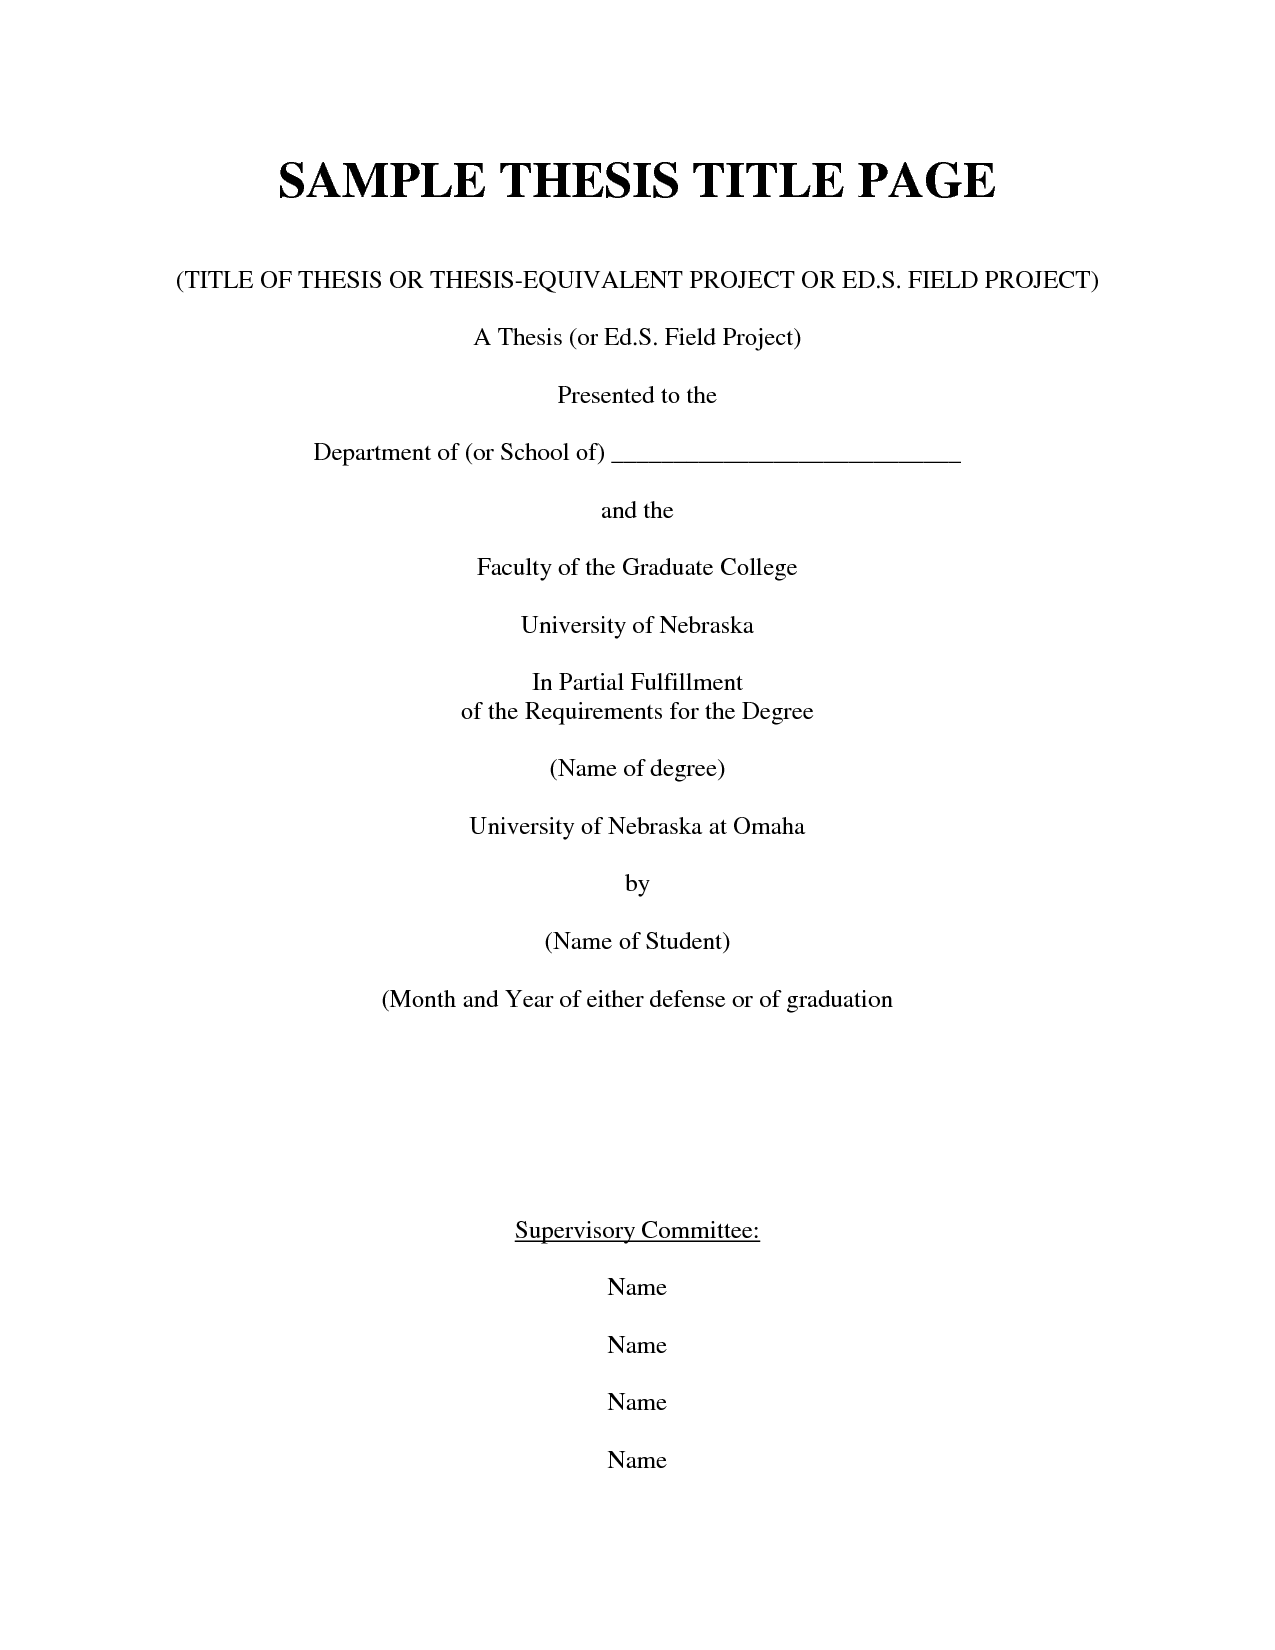 Dissertation title page